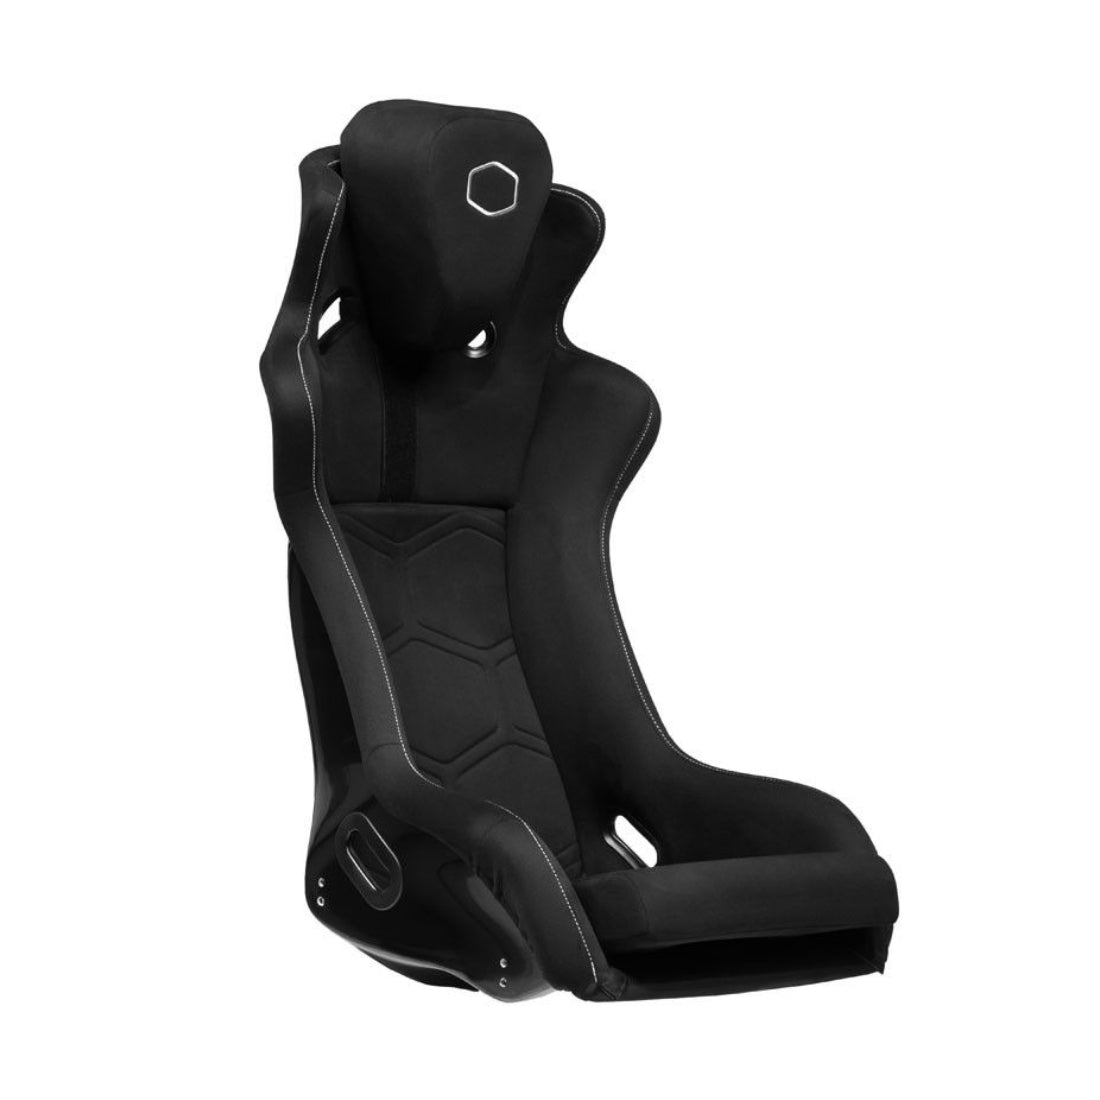 Cooler Master Dyn X Racing Seat - Black - مقعد ألعاب